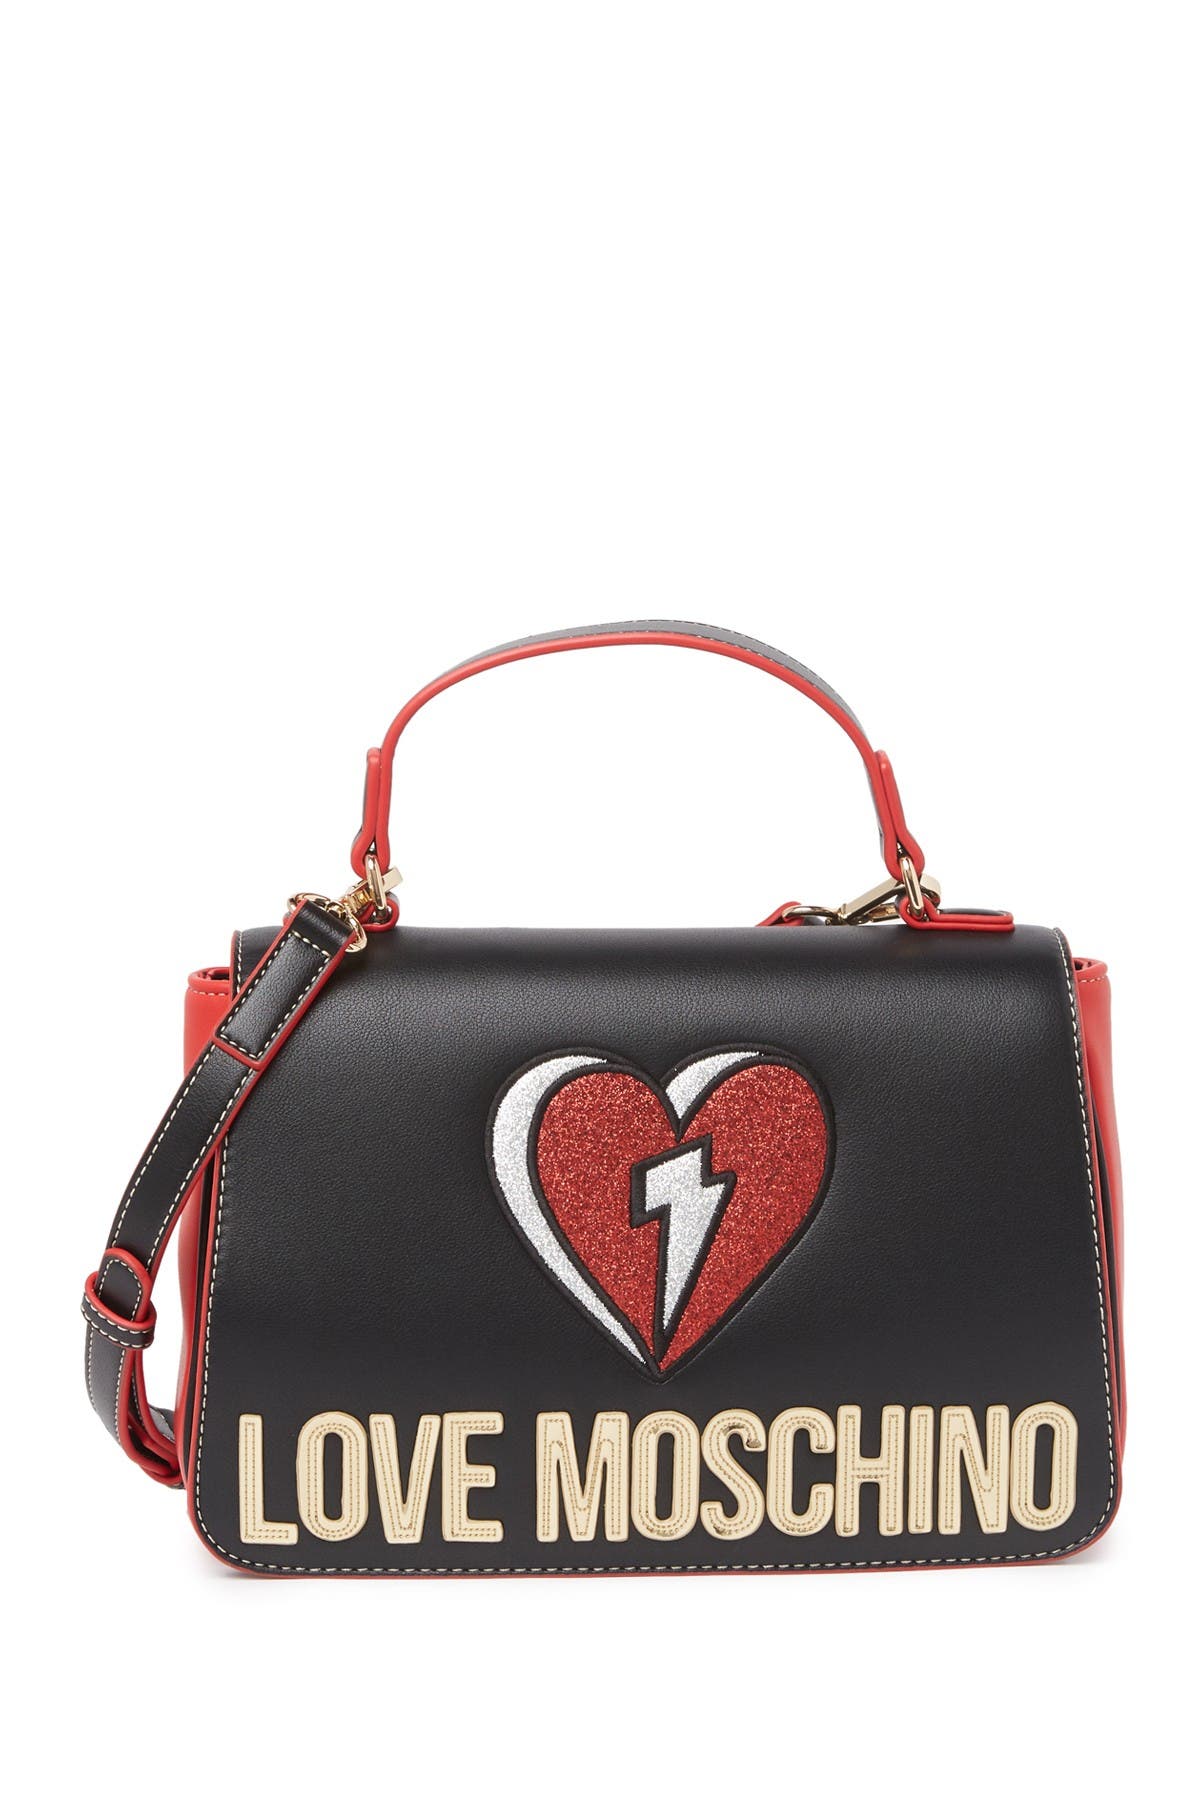 love moschino bag red heart